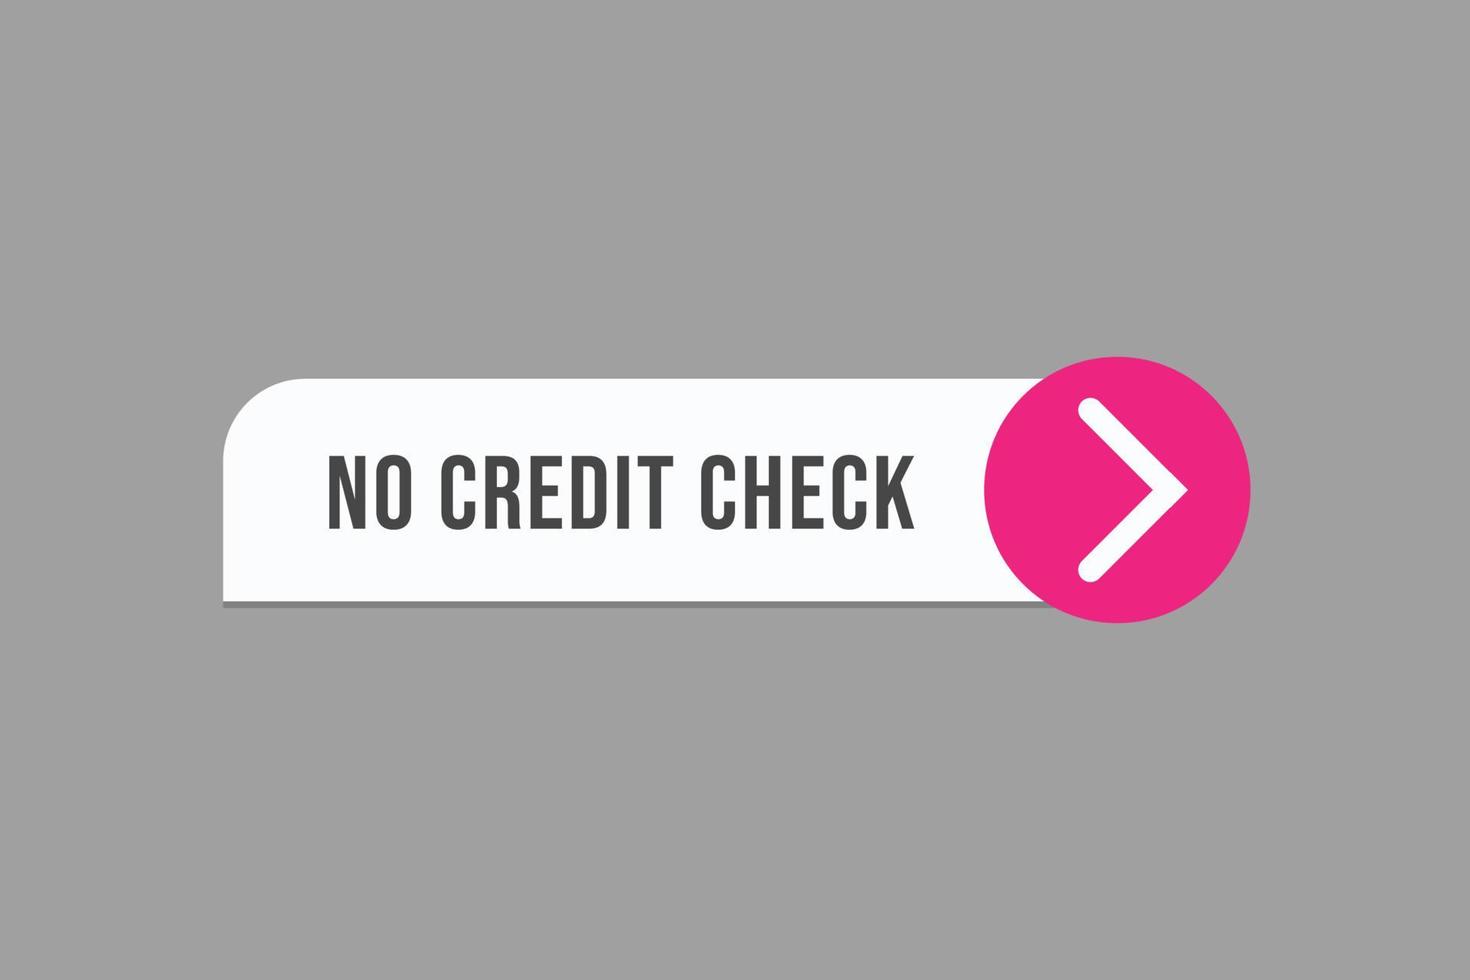 no credit check button vectors.sign label speech bubble no credit check vector